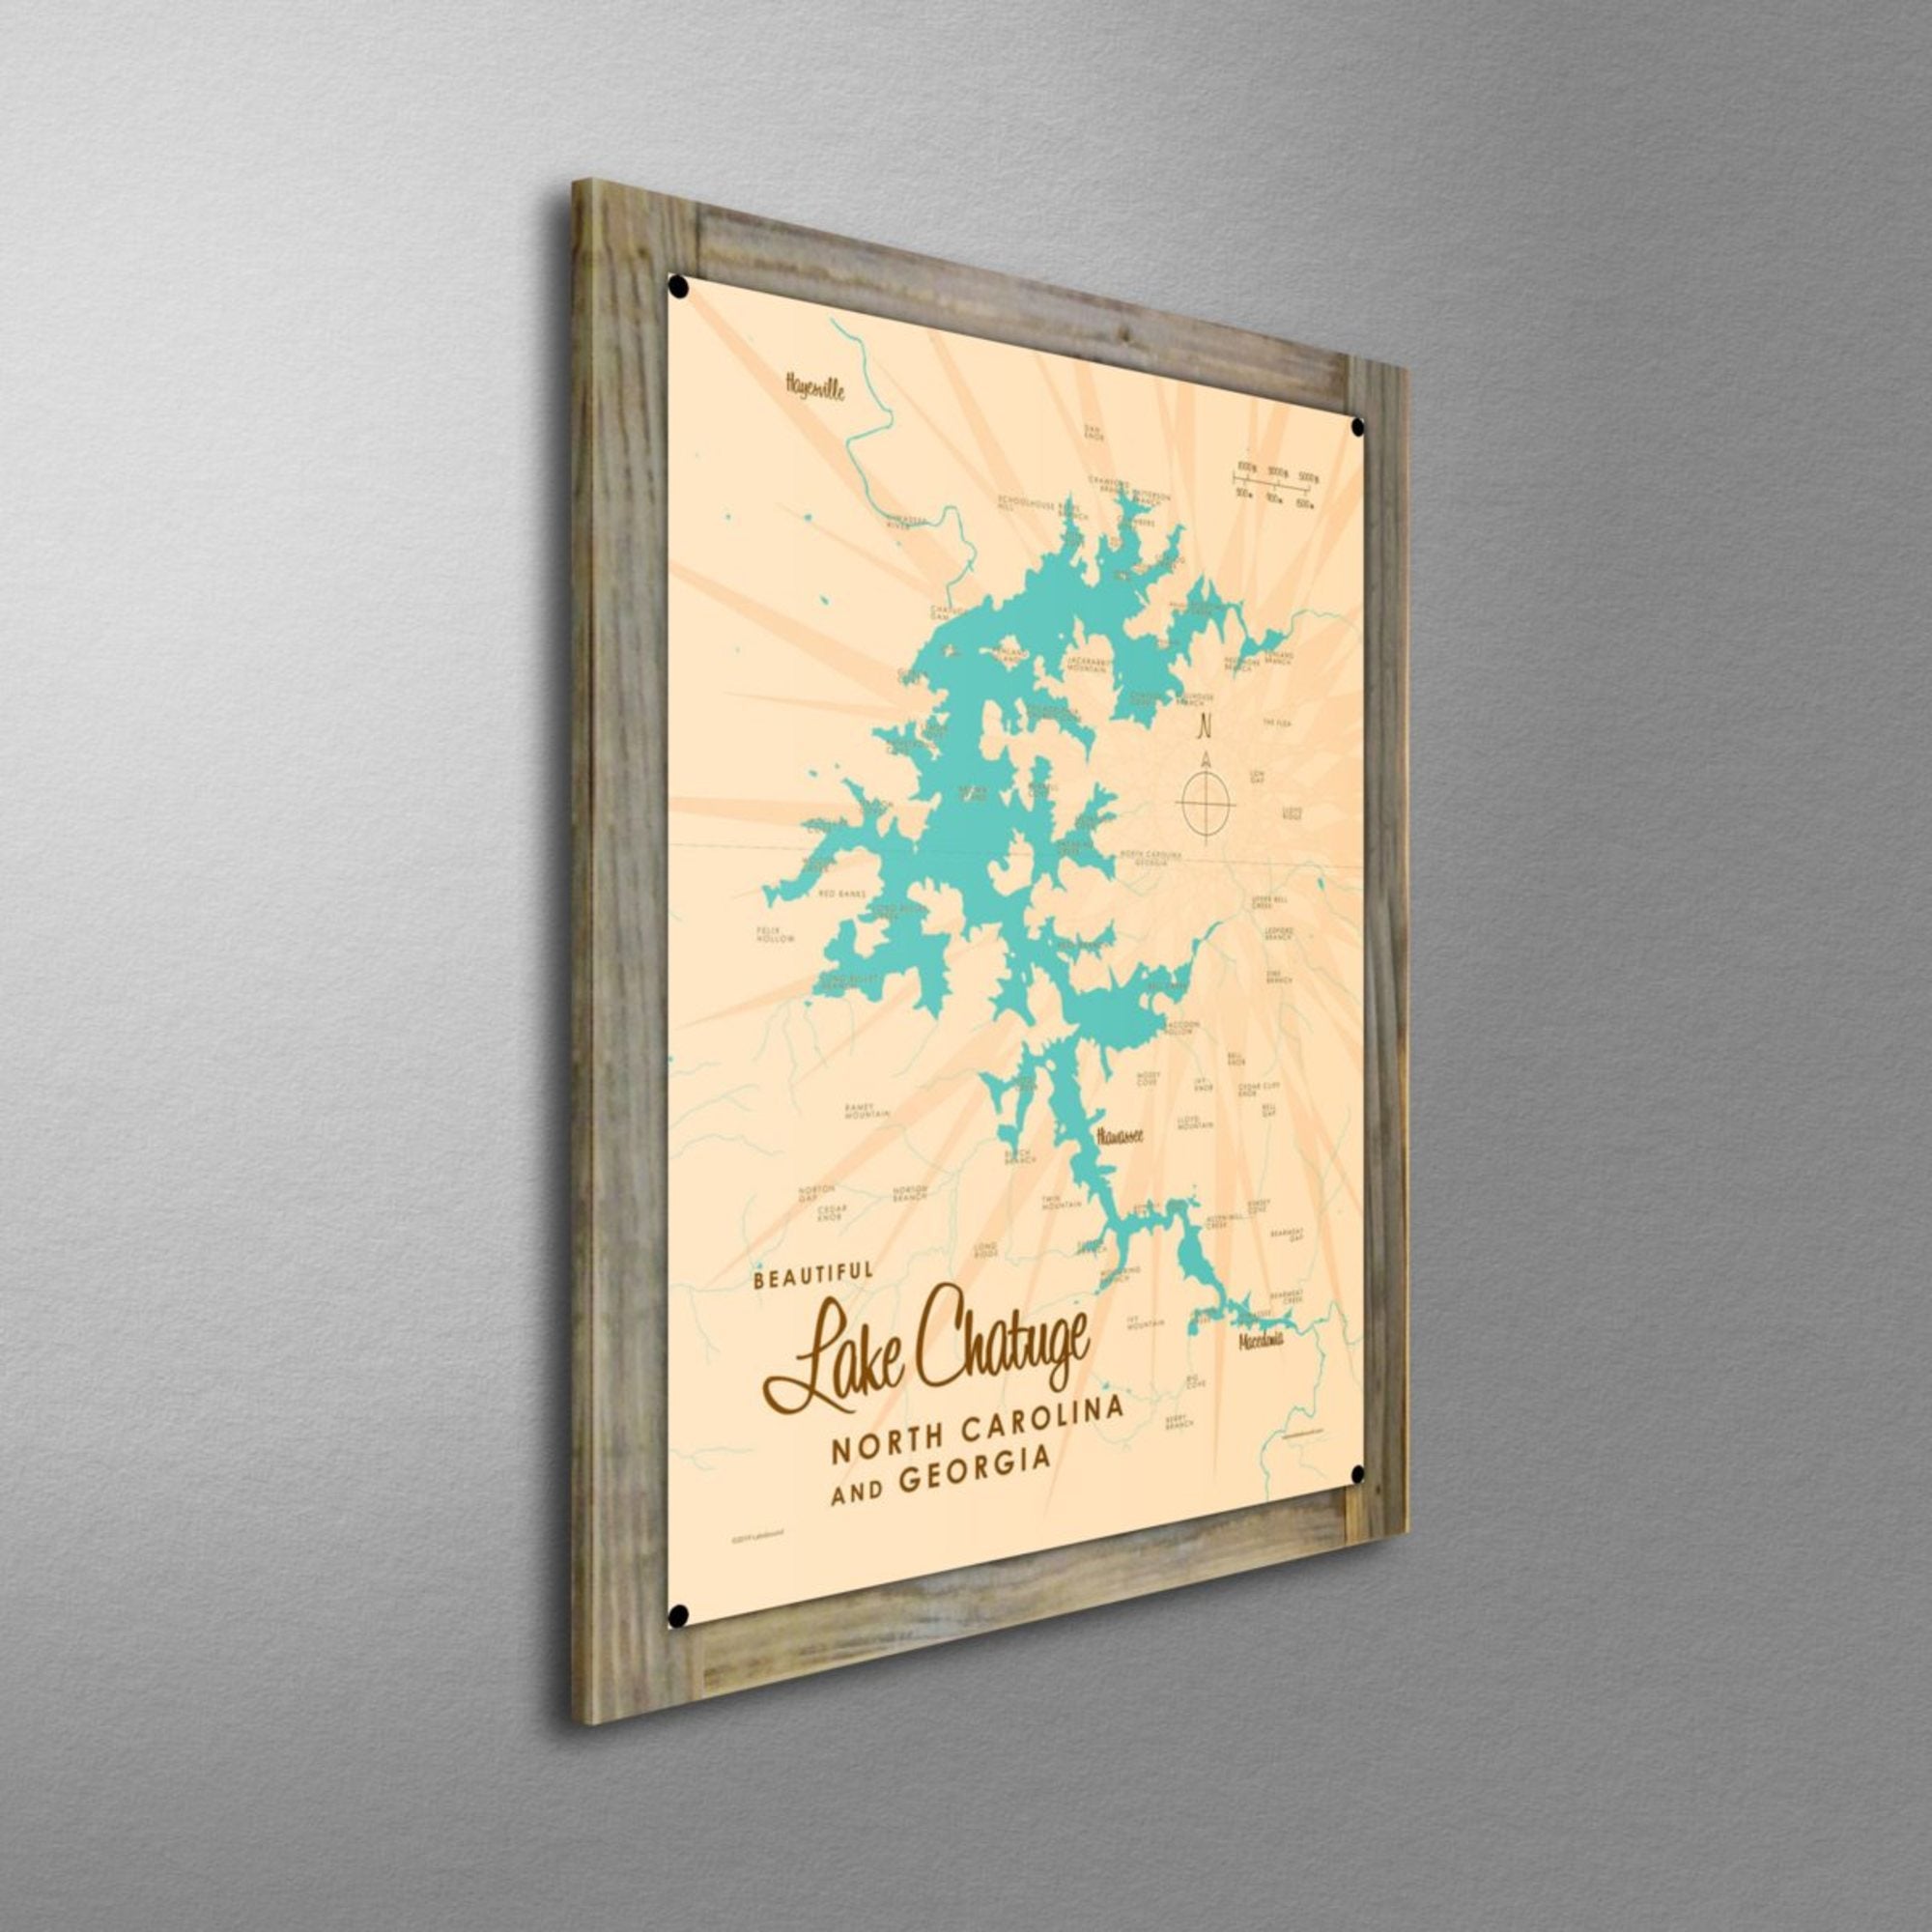 Lake Chatuge NC Georgia, Wood-Mounted Metal Sign Map Art